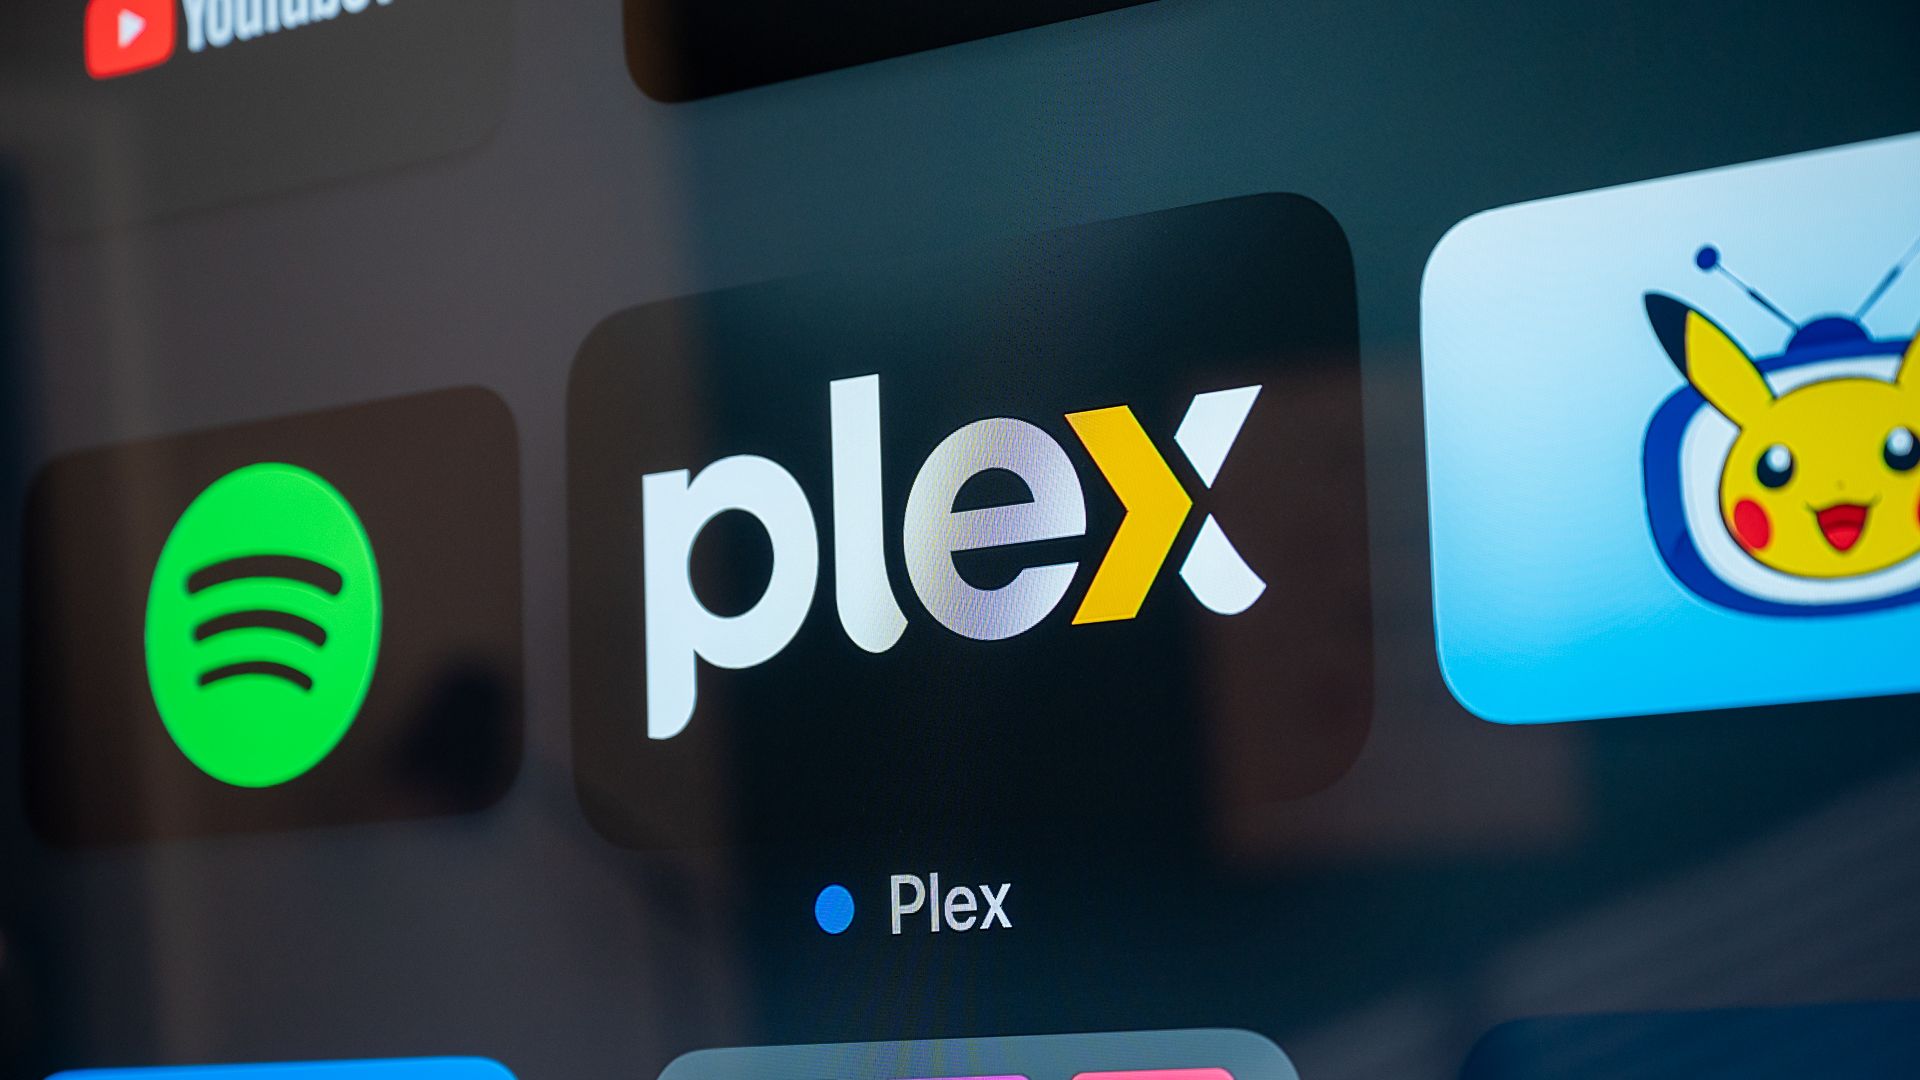 Plex app icon on an Apple TV